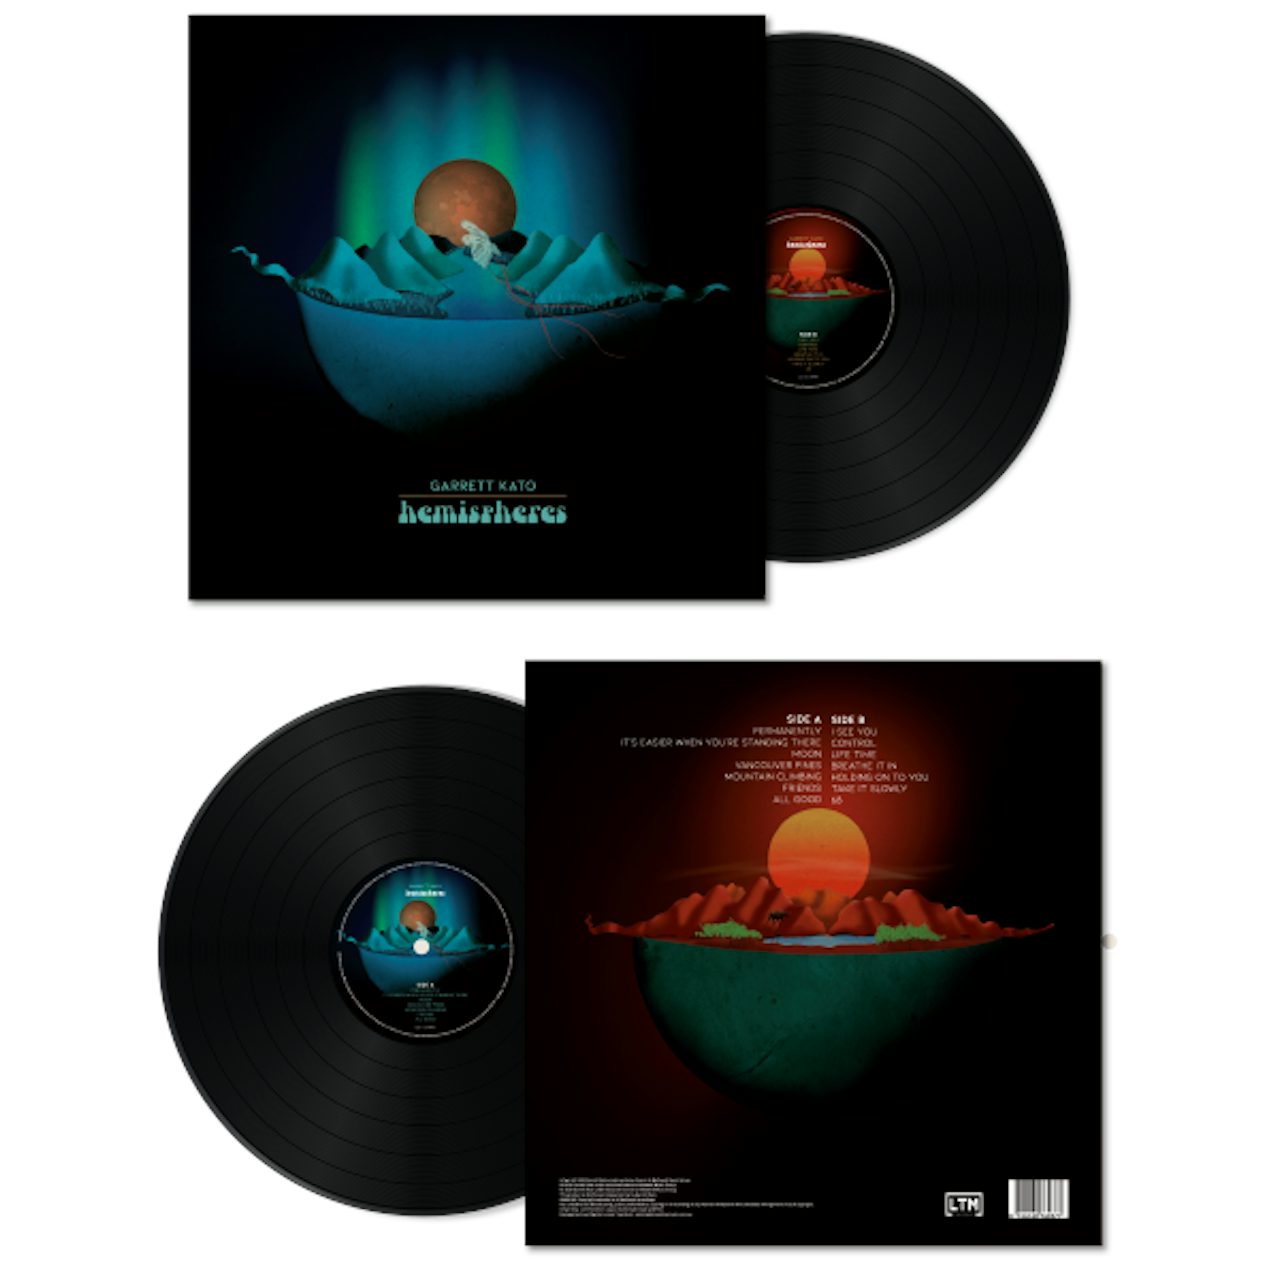 Garrett Kato Hemispheres 12 Vinyl Limited Edition